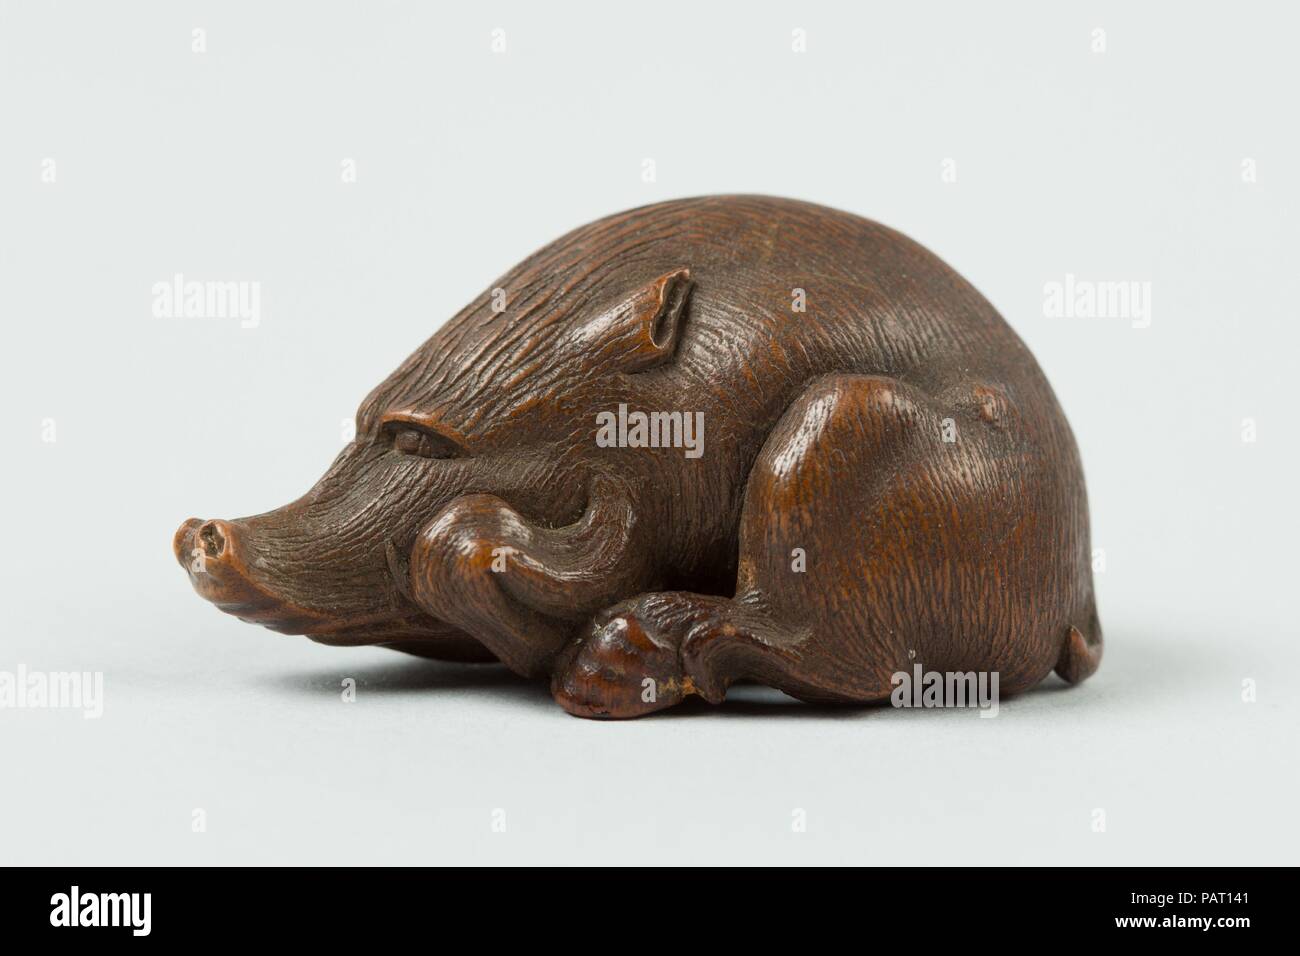 Netsuke of a Boar. Culture: Japan. Dimensions: H. 7/8 in. (2.2 cm); W. 1 1/2 in. (3.8 cm); D. 7/8 in. (2.2 cm). Date: 19th century. Museum: Metropolitan Museum of Art, New York, USA. Stock Photo